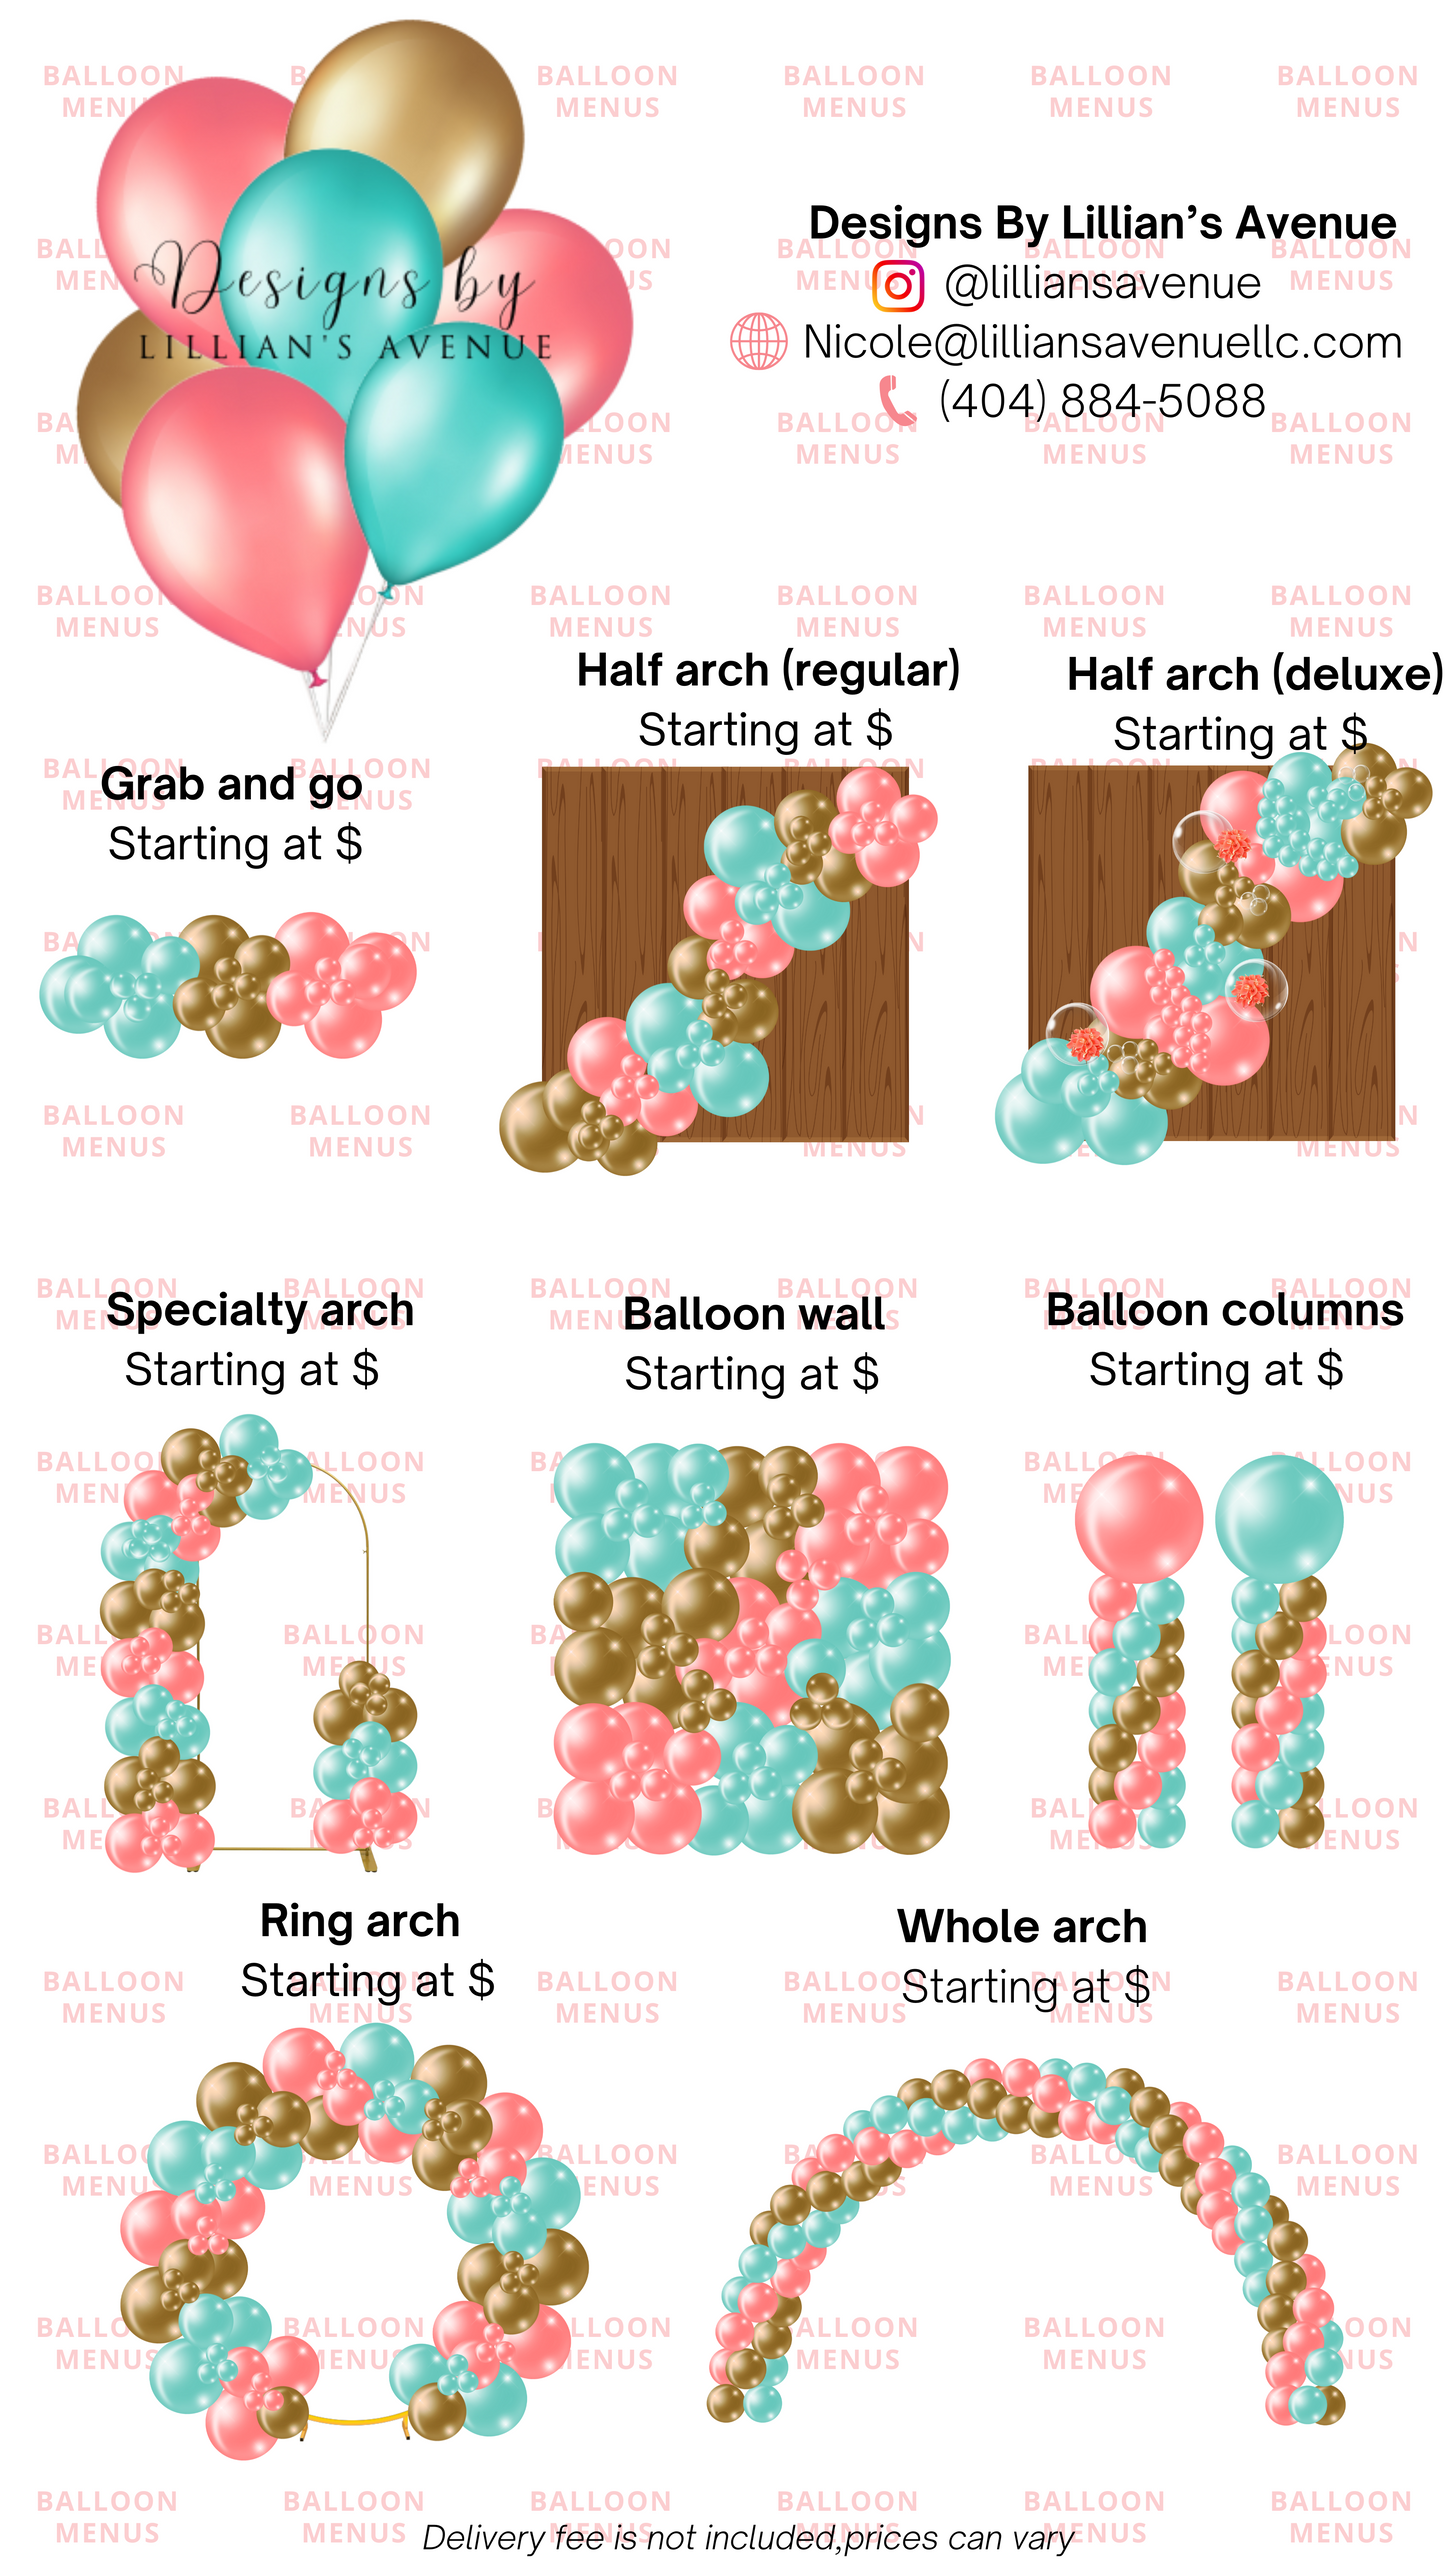 Designs By Lillian’s Avenue- Client Balloon Menu